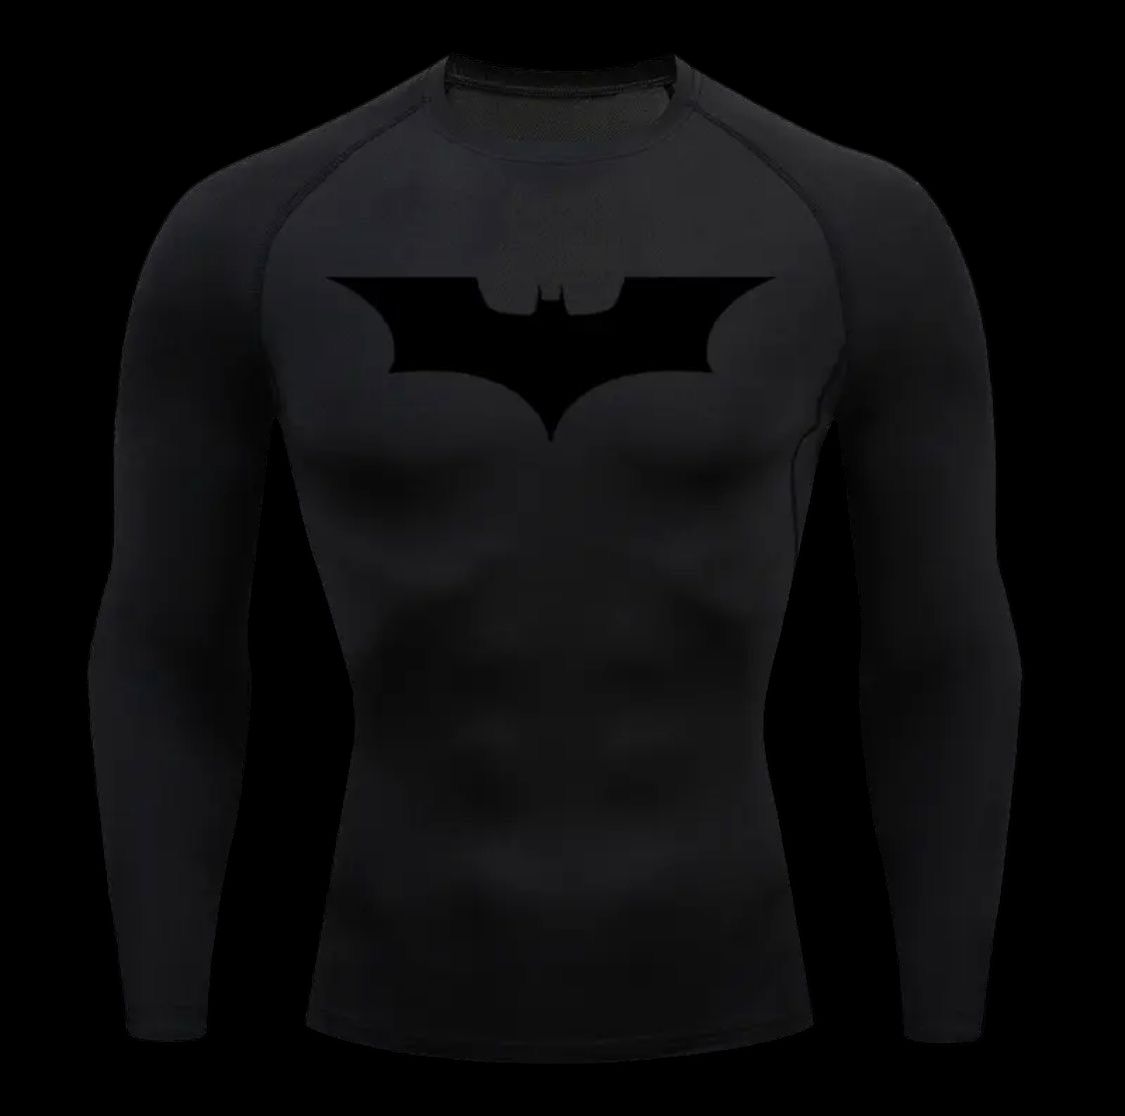 Batman manga larga todo negro Dale un impulso a tu entrenamiento